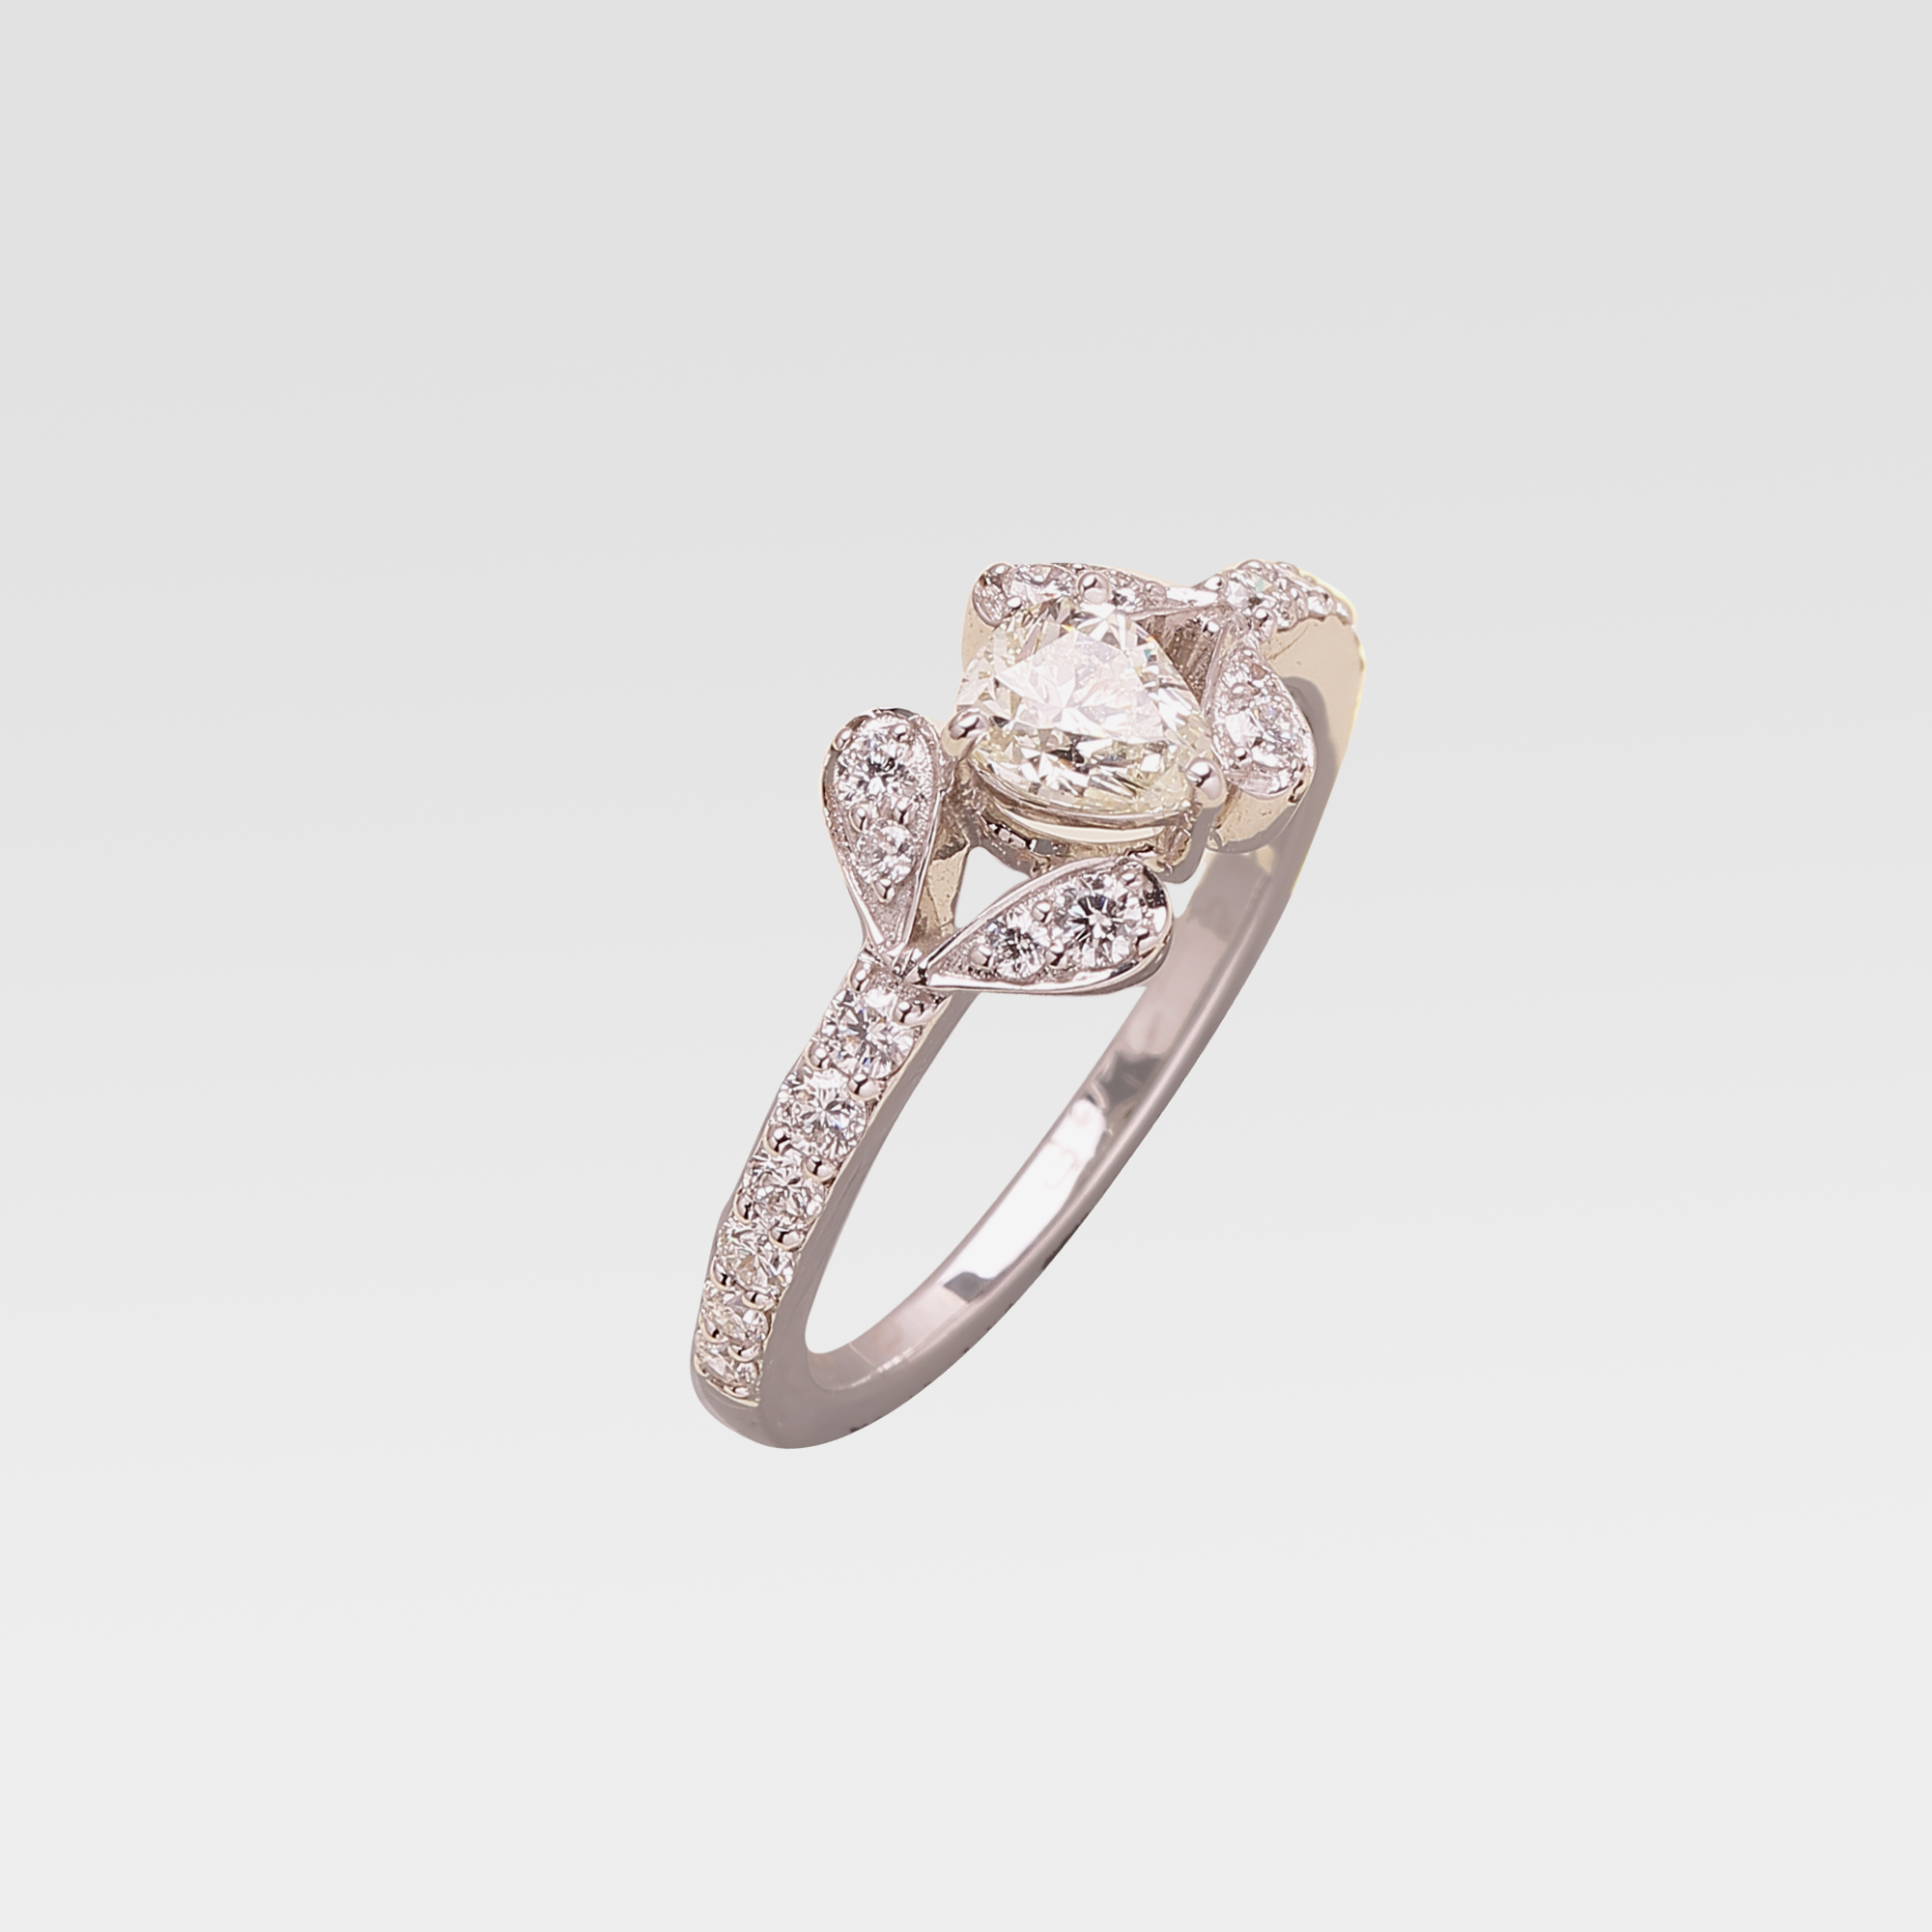 Radiant diamond ring